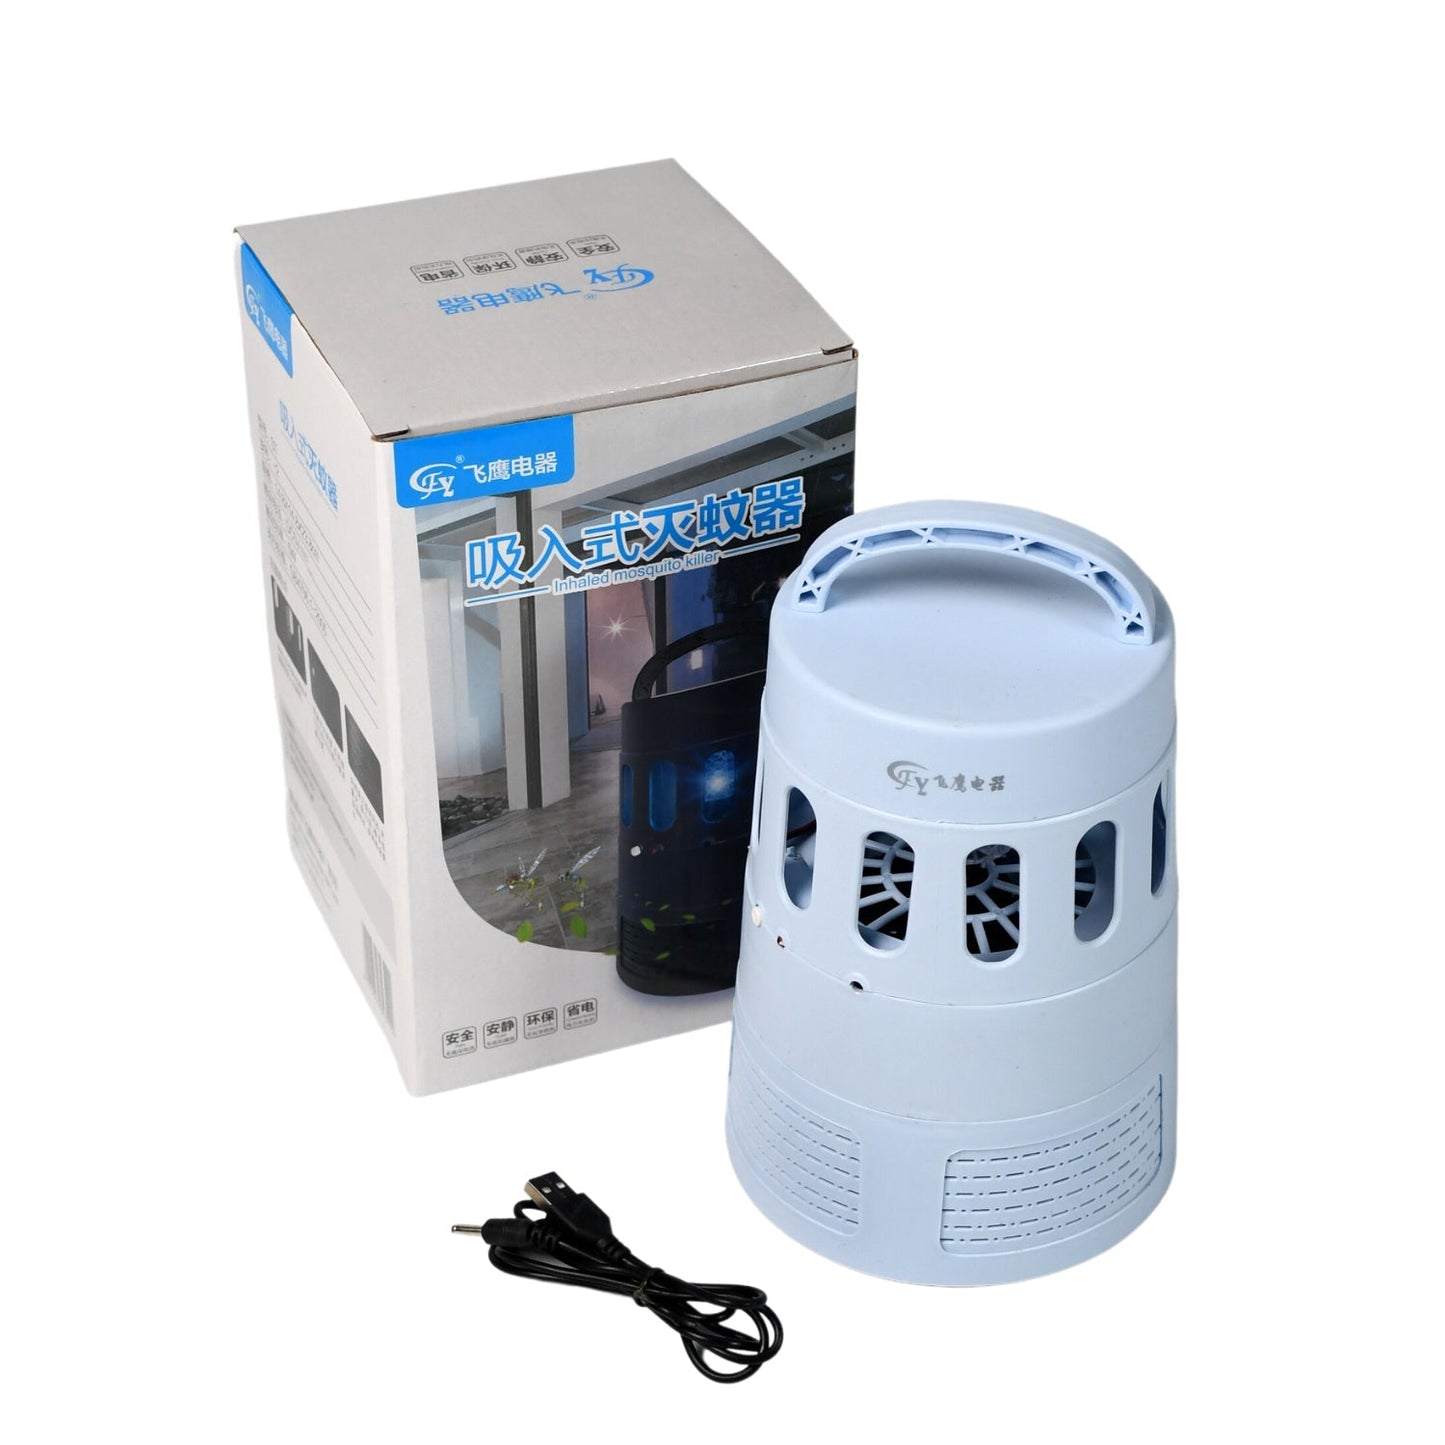 1476 Home Indoor Bedroom Mosquito Repellent Lamp Usb Plug-In No Radiation Baby Electric Trap USB Charging JK Trends